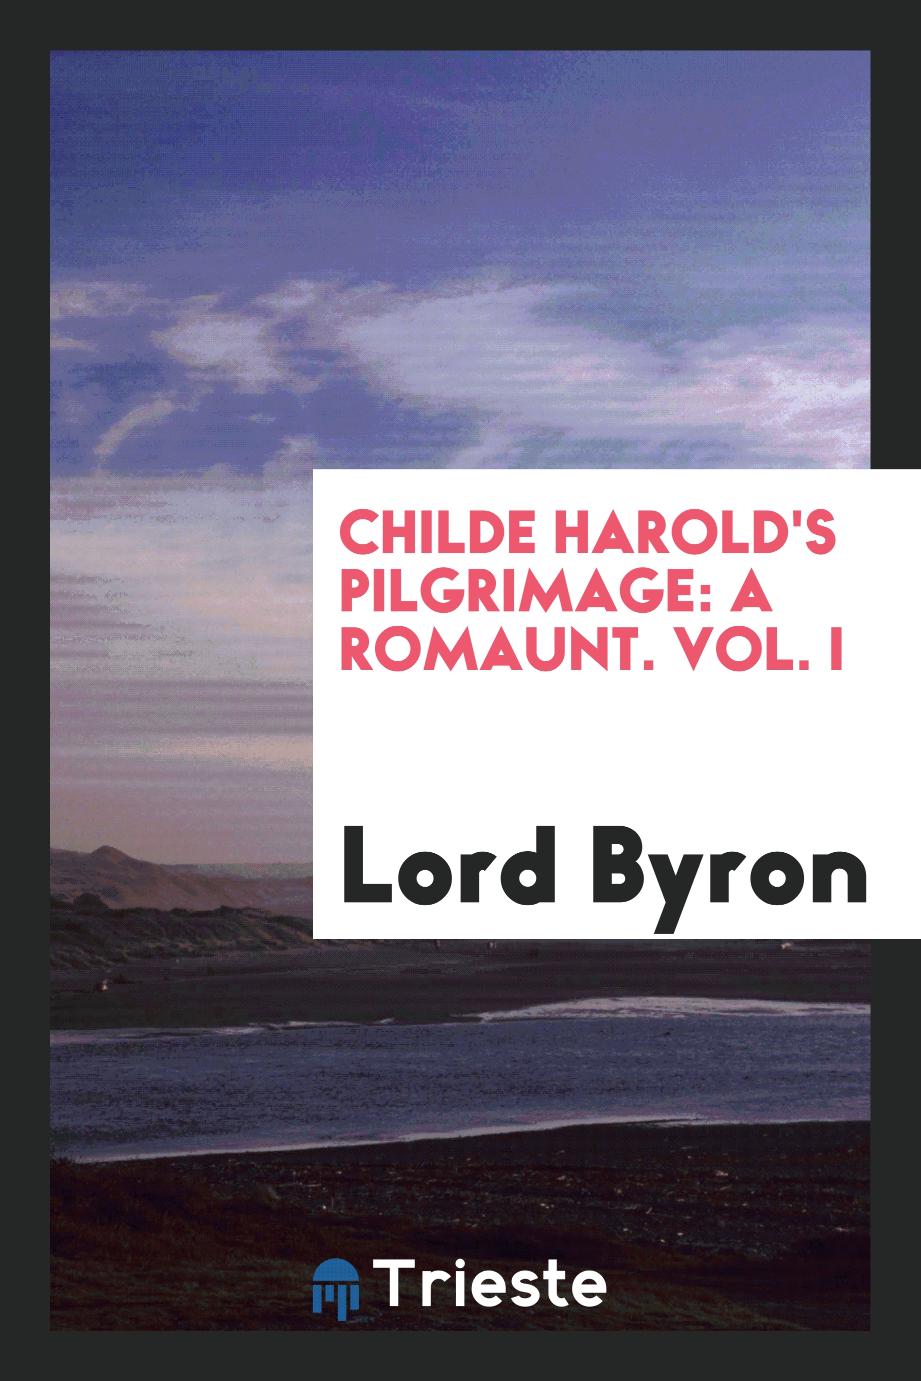 Childe Harold's Pilgrimage: A Romaunt. Vol. I